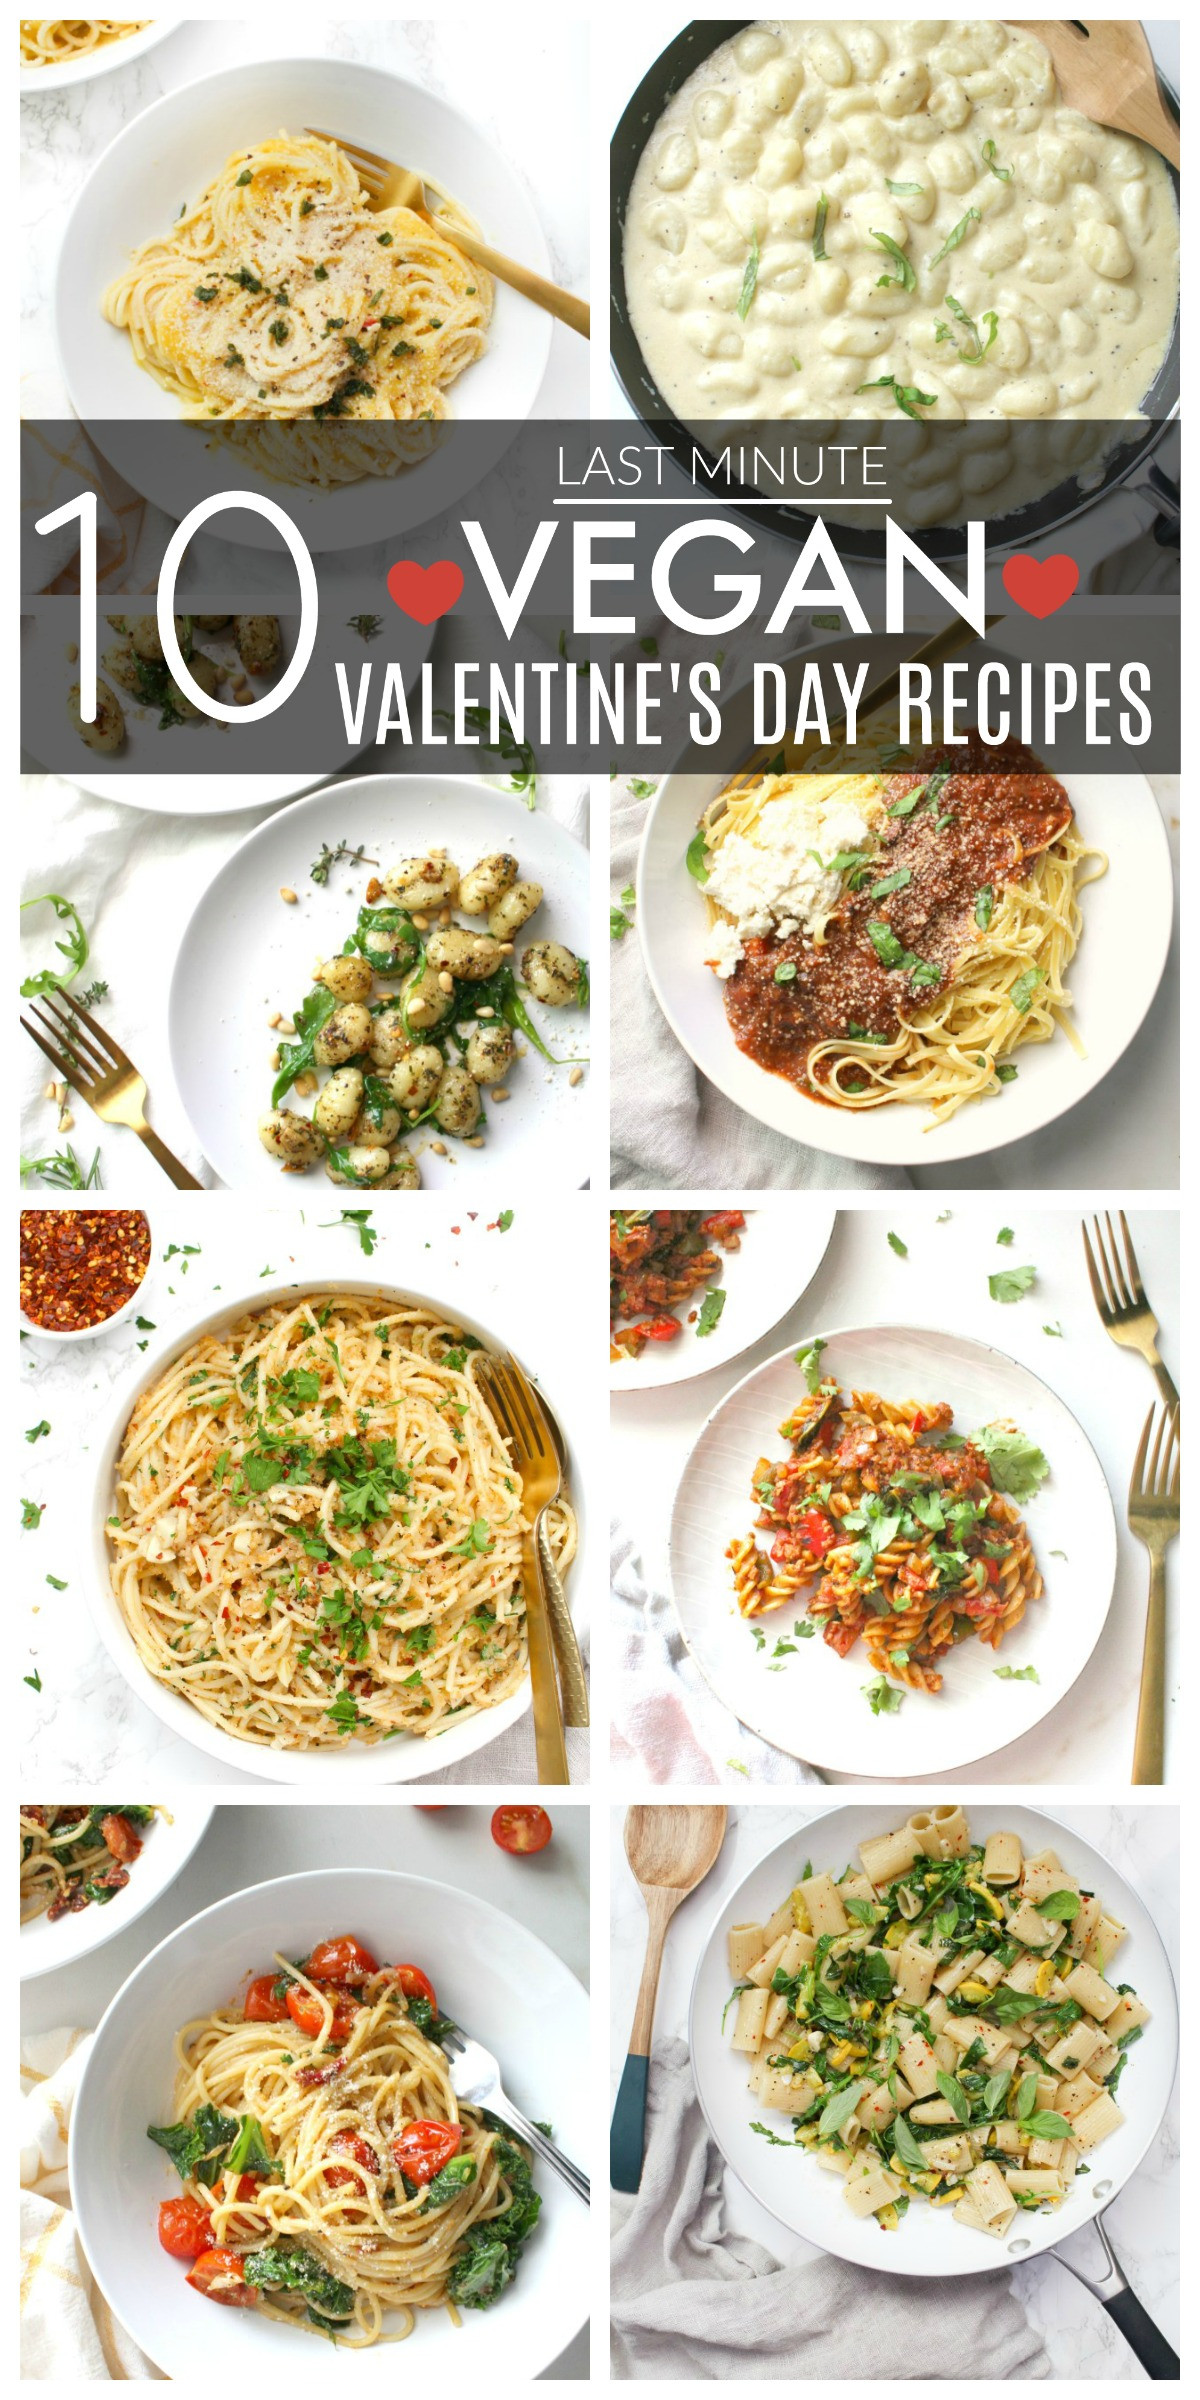 Vegan Valentine'S Day Recipes
 10 Last Minute Vegan Valentine s Day Recipes